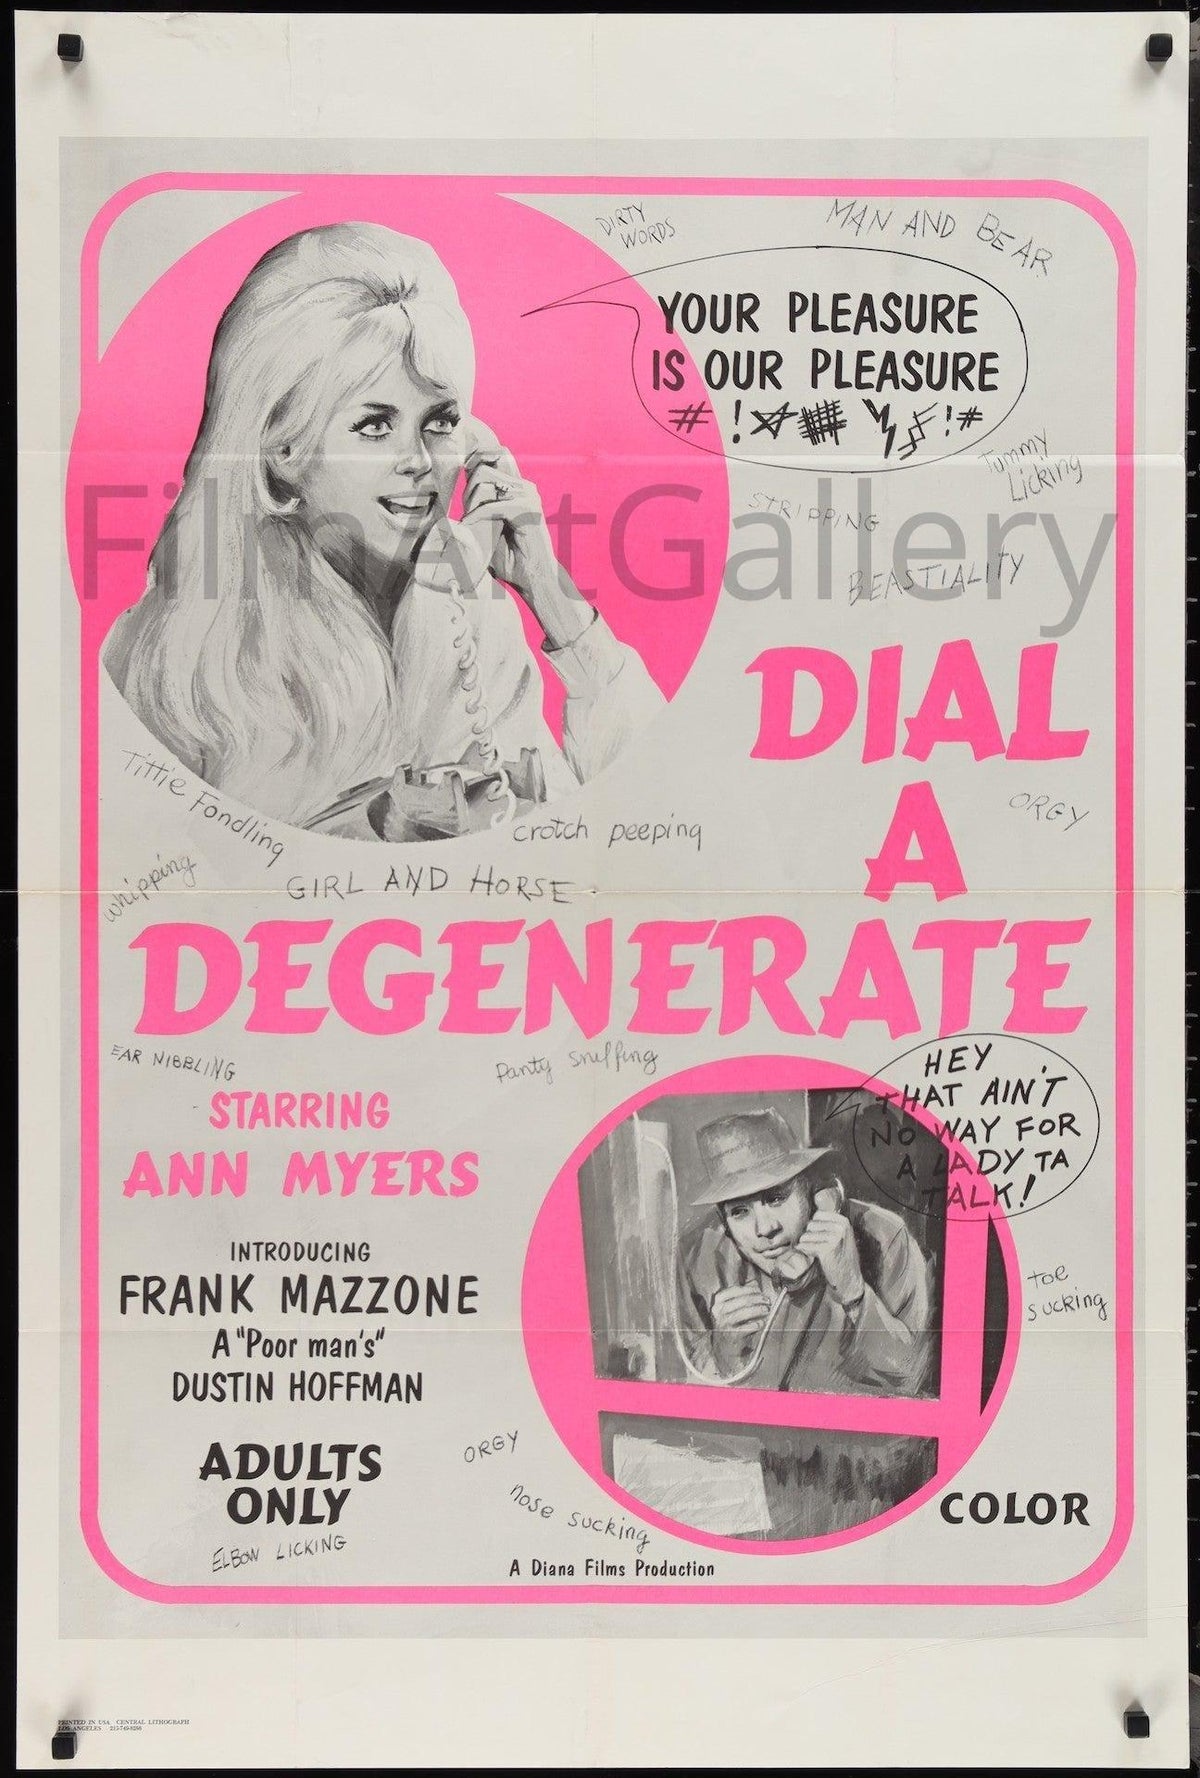 Dial A Degenerate 1 Sheet (27x41) Original Vintage Movie Poster